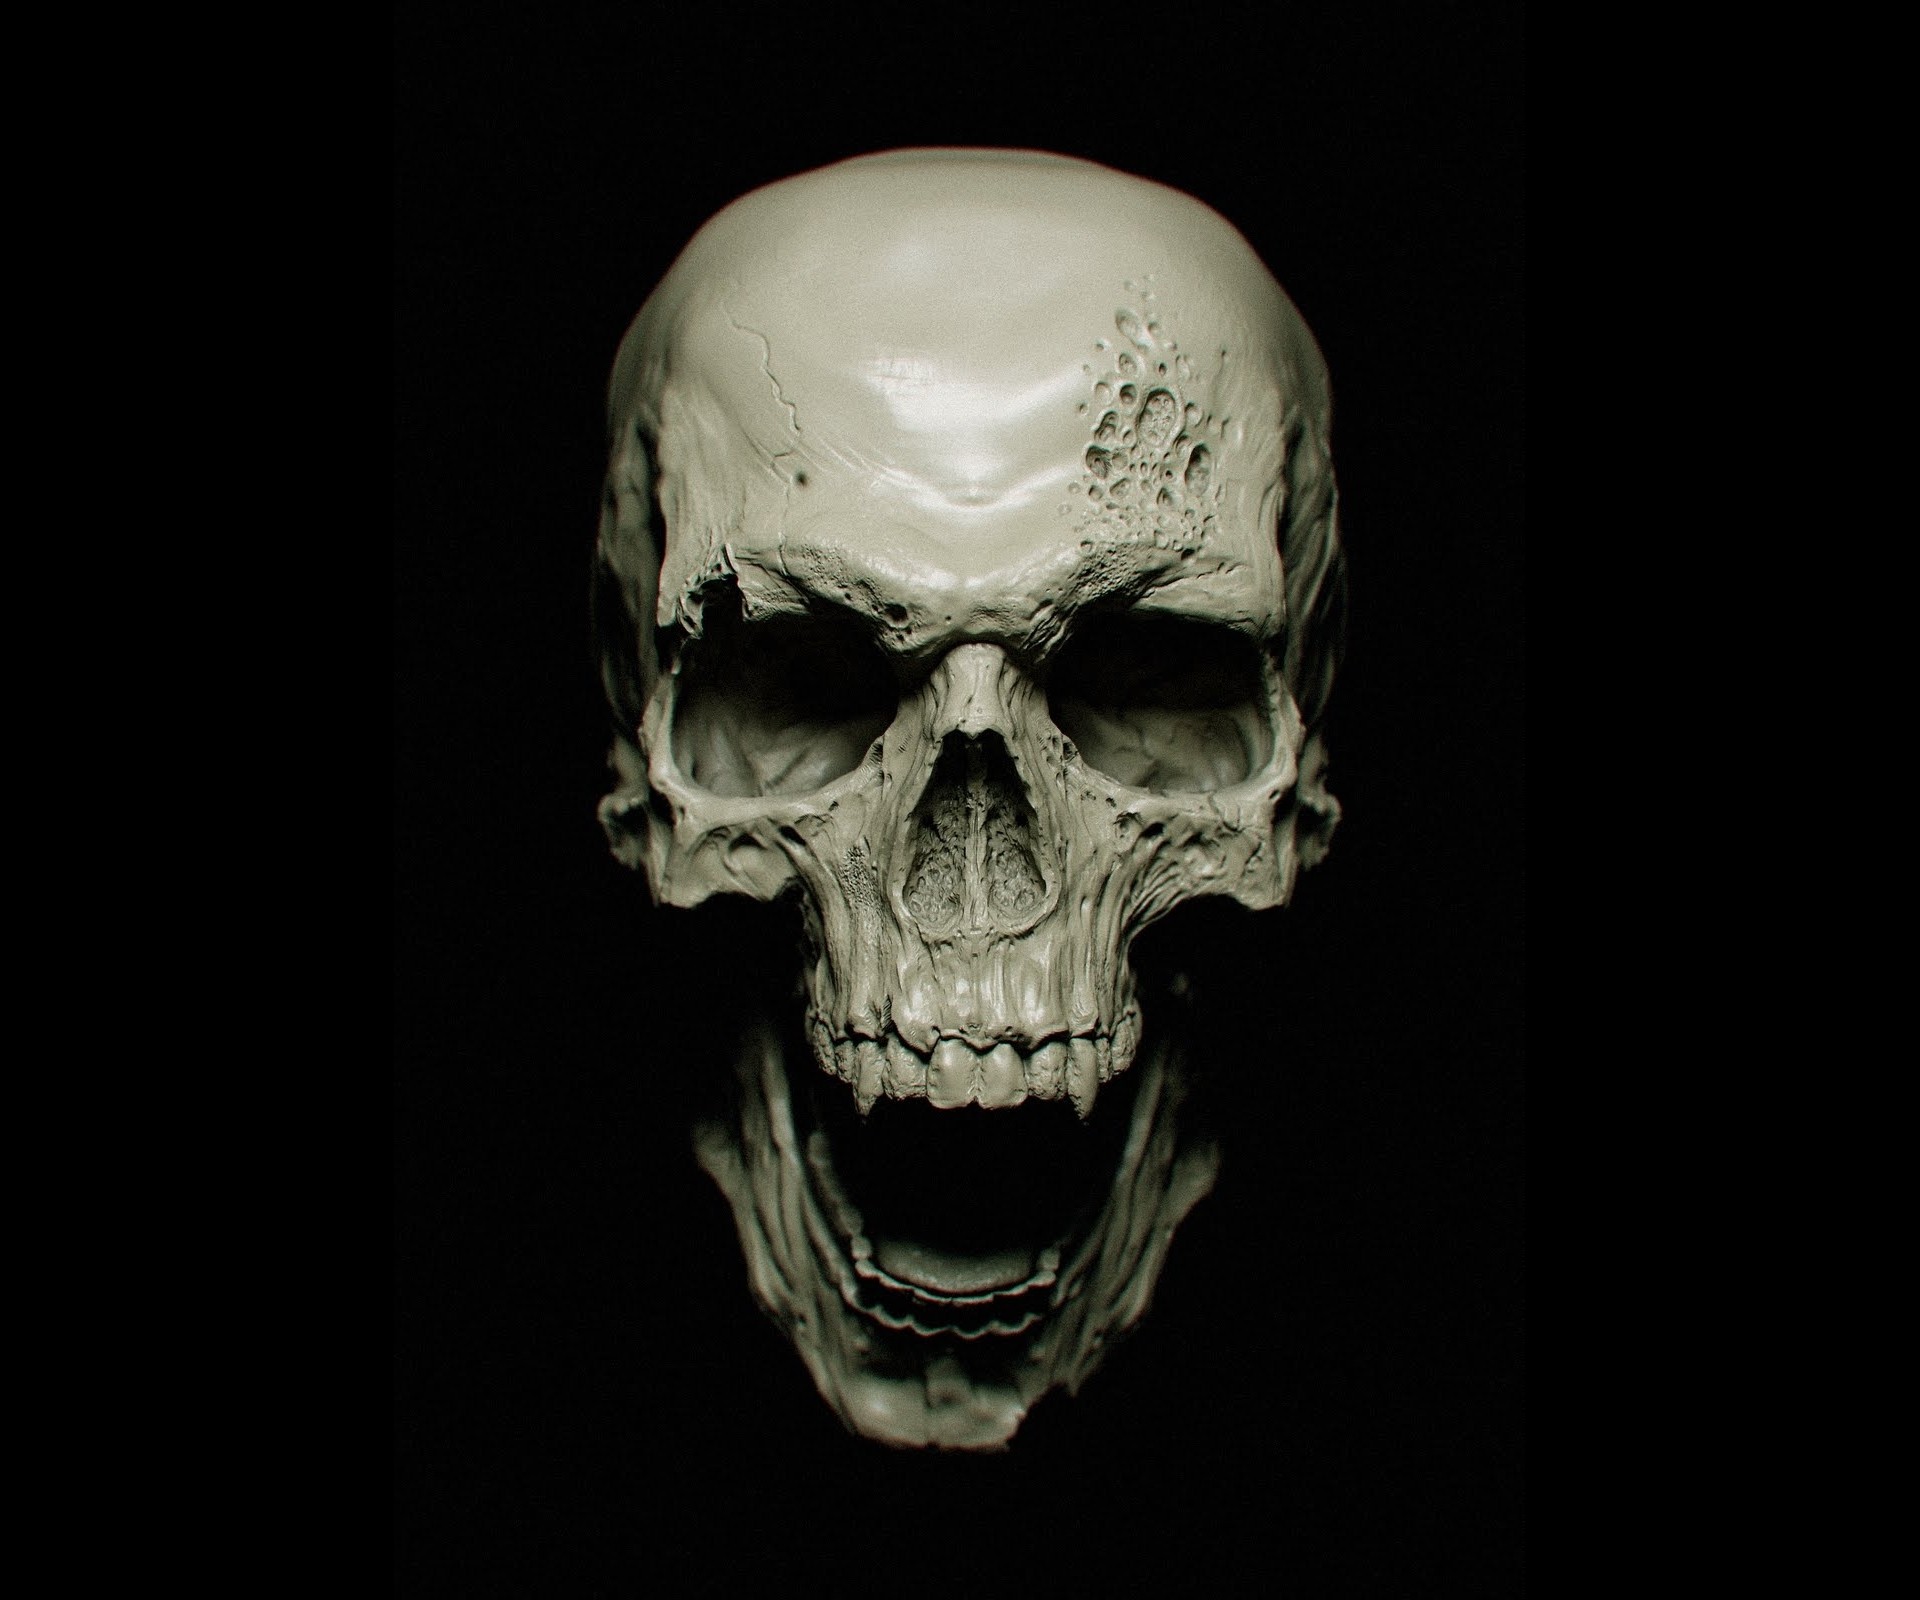 General 1920x1600 dark vampires skull black background simple background